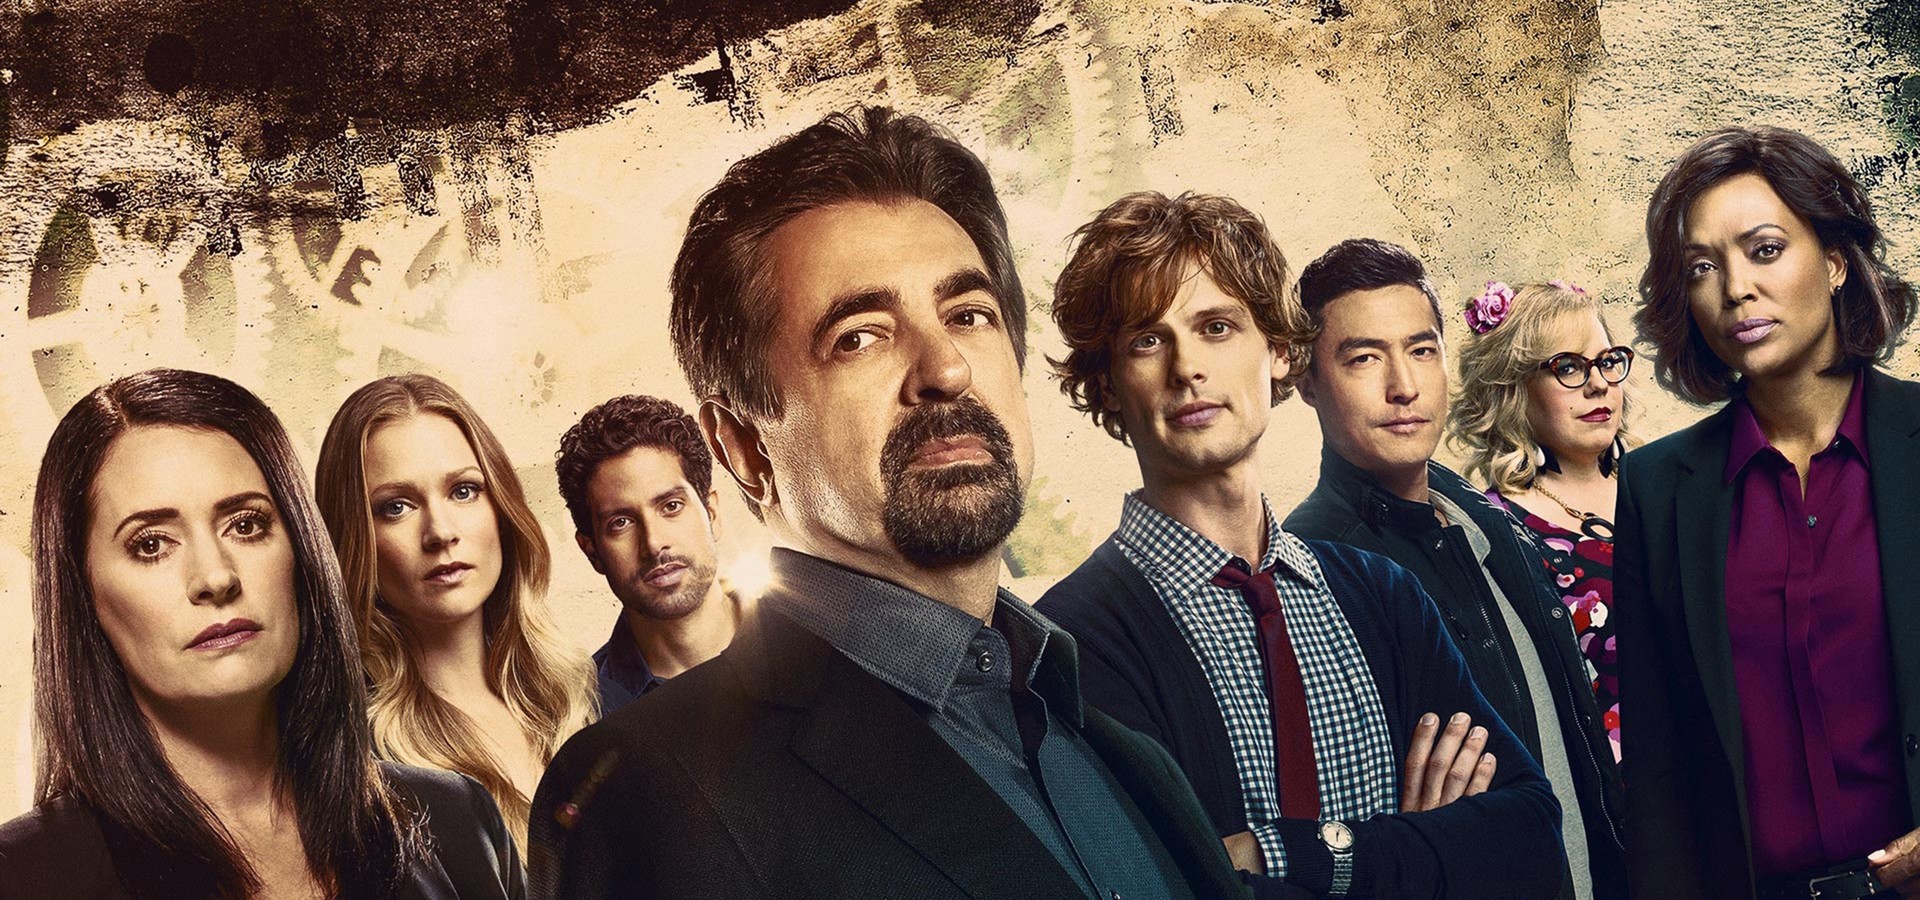 Criminal Minds Season 1 Watch Episodes Streaming Online